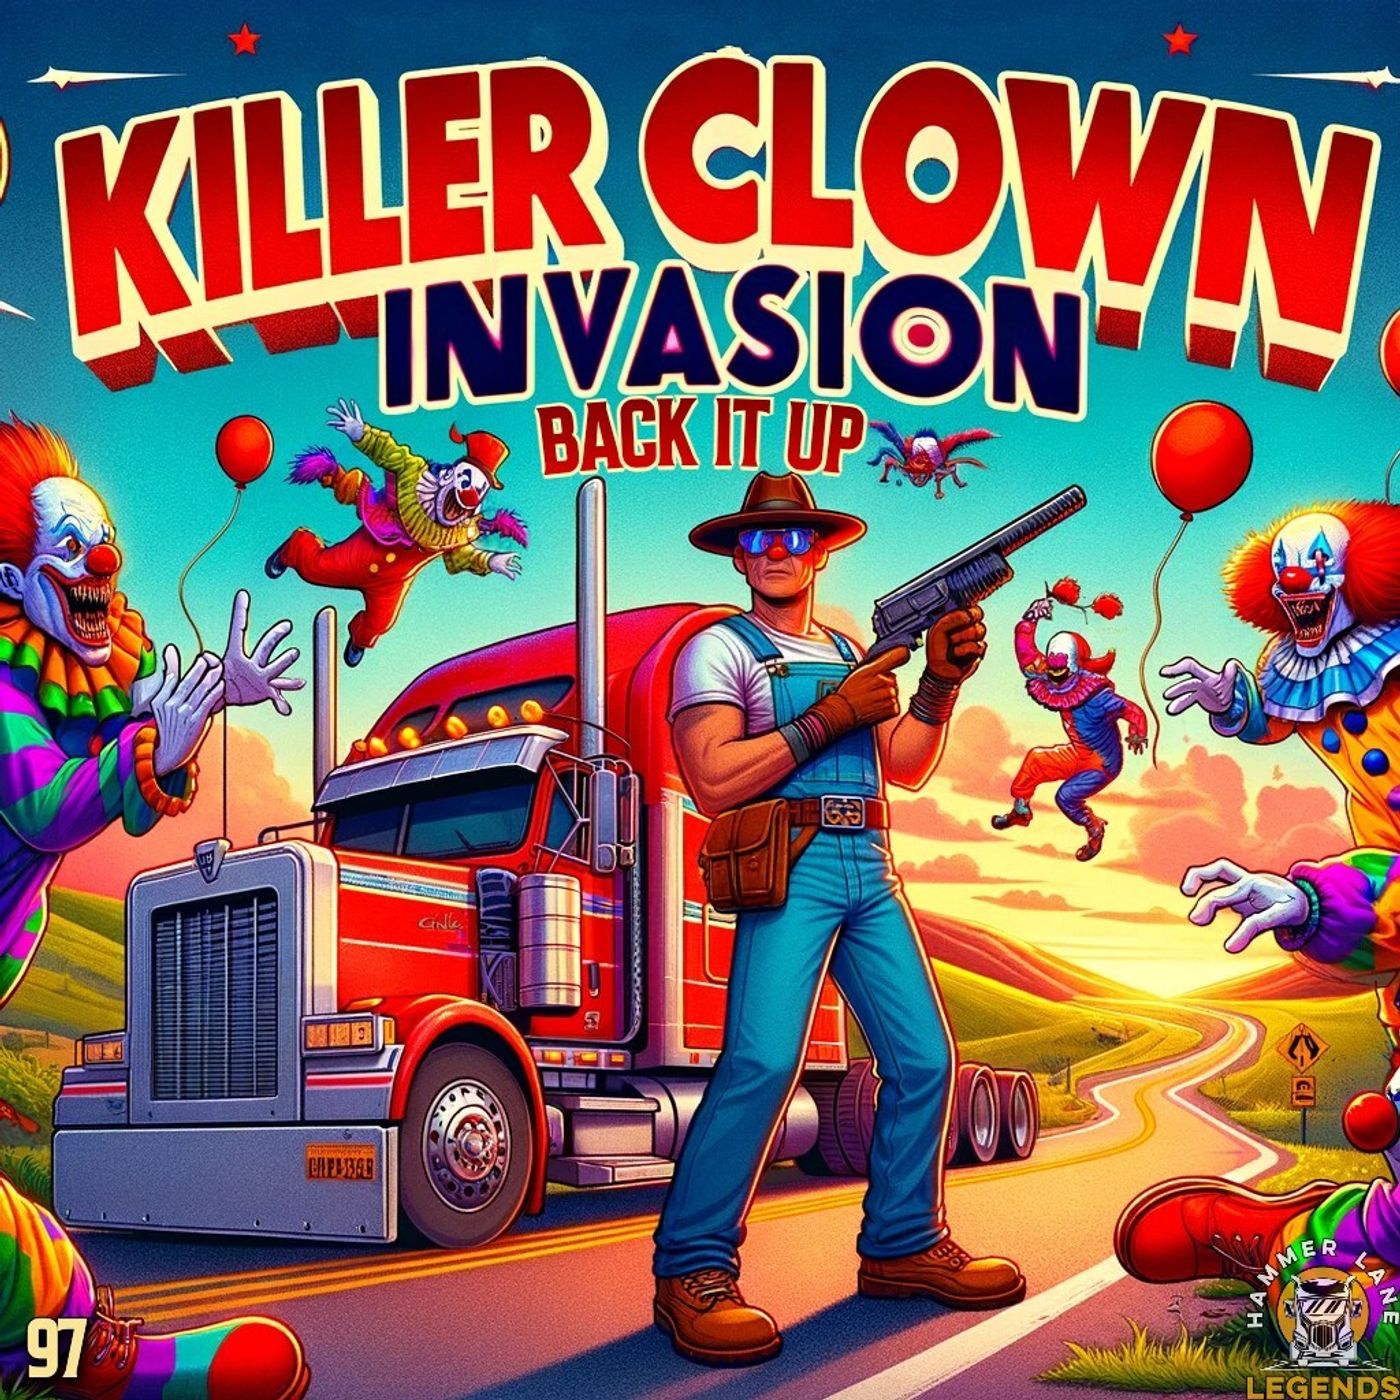 BACK IT UP | 97: Killer Clown Invasion